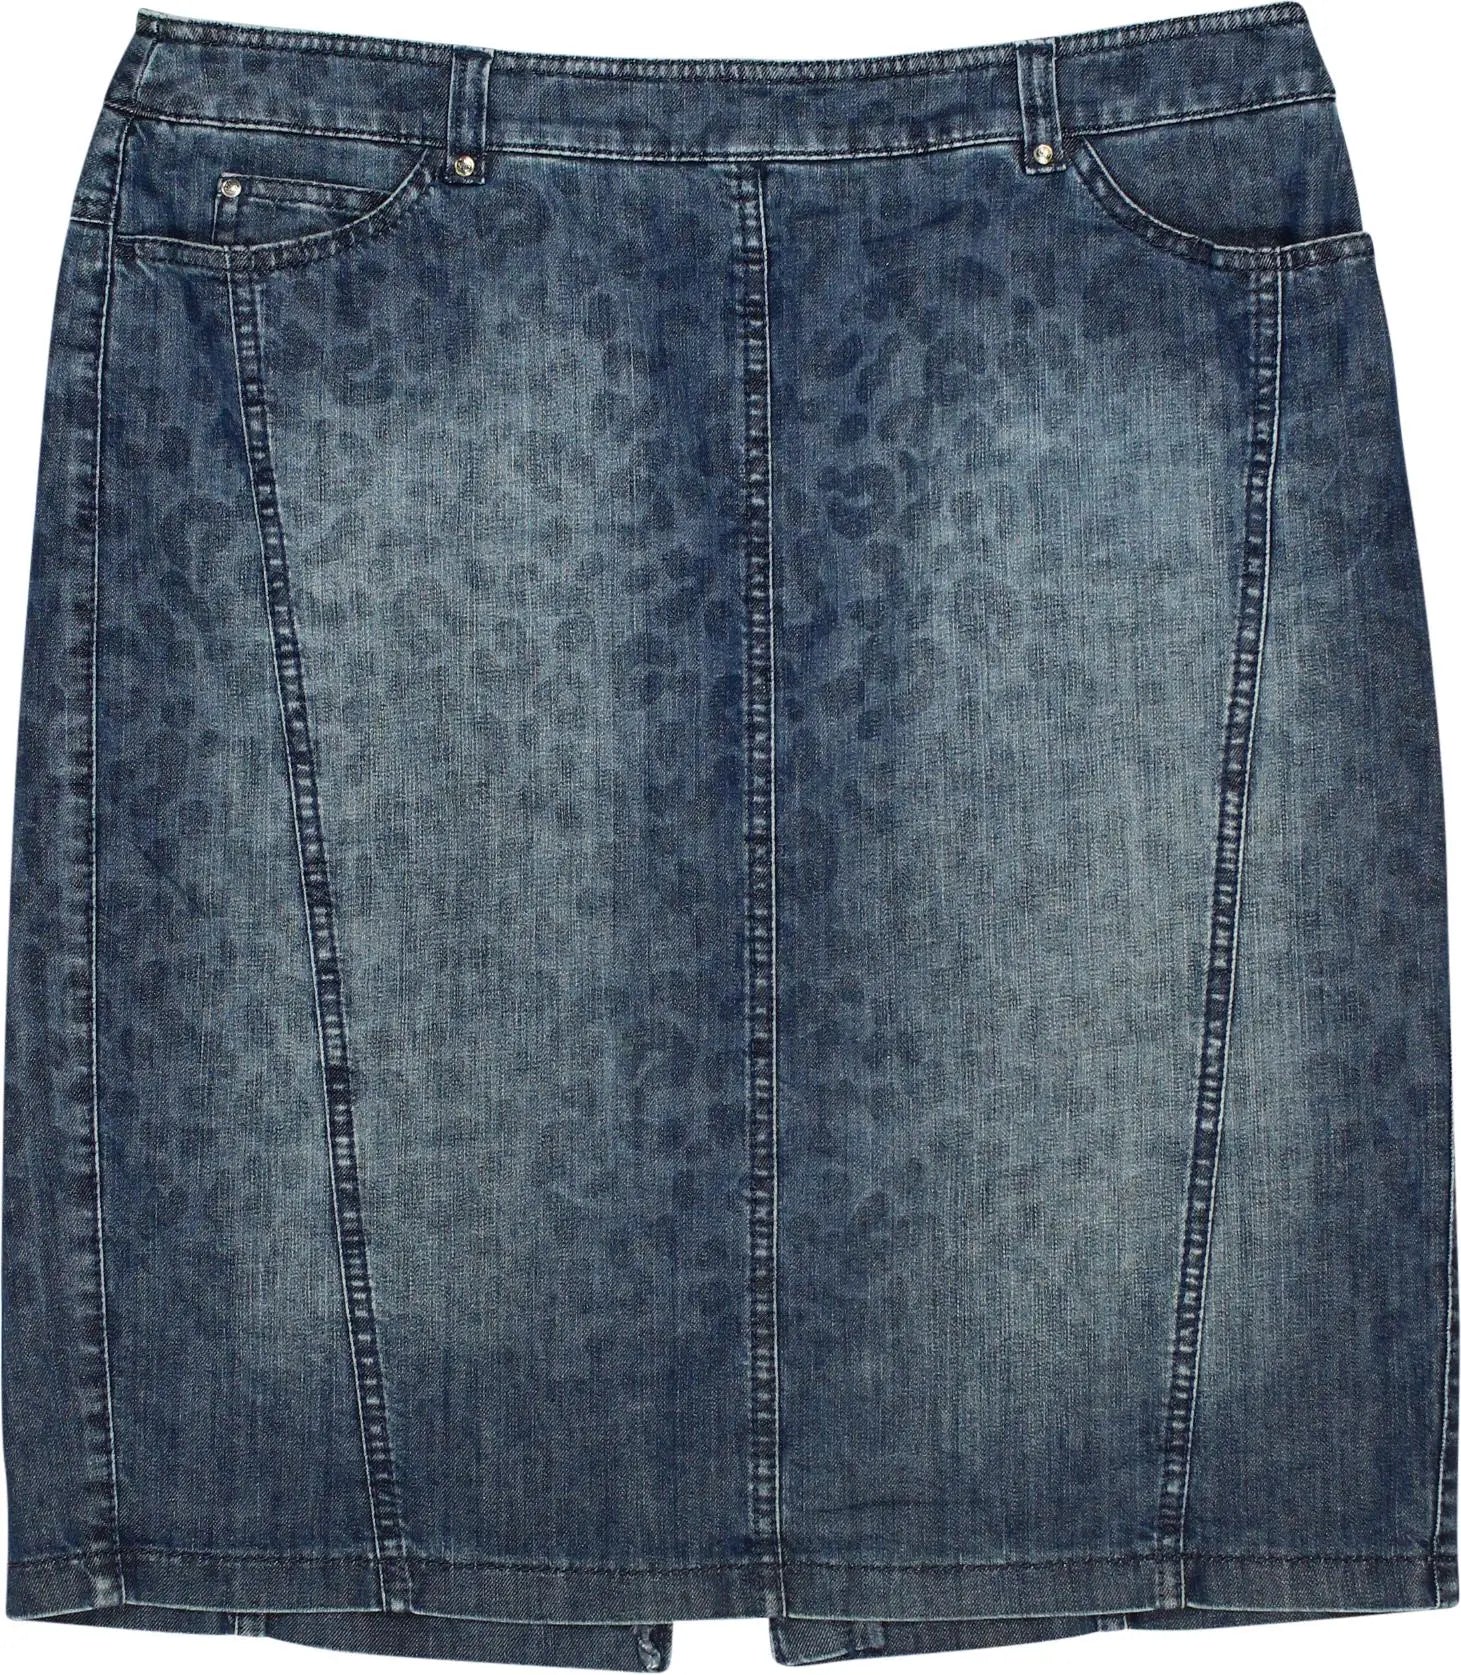 Gerry Weber - Denim Skirt- ThriftTale.com - Vintage and second handclothing